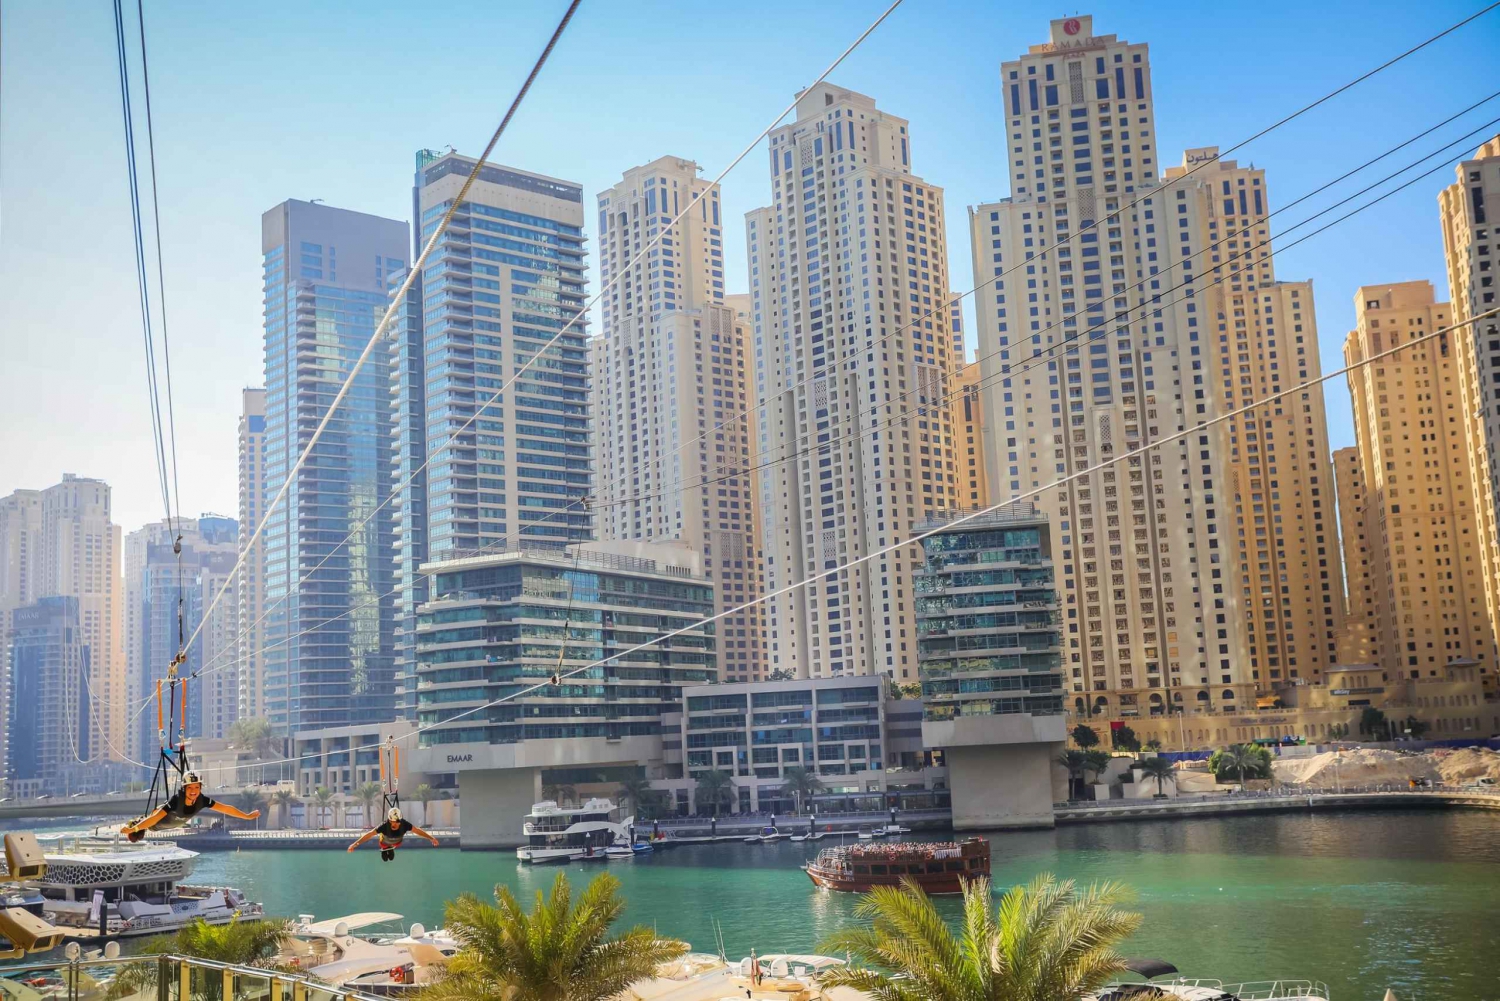 Dubai: Zip Line across the Marina